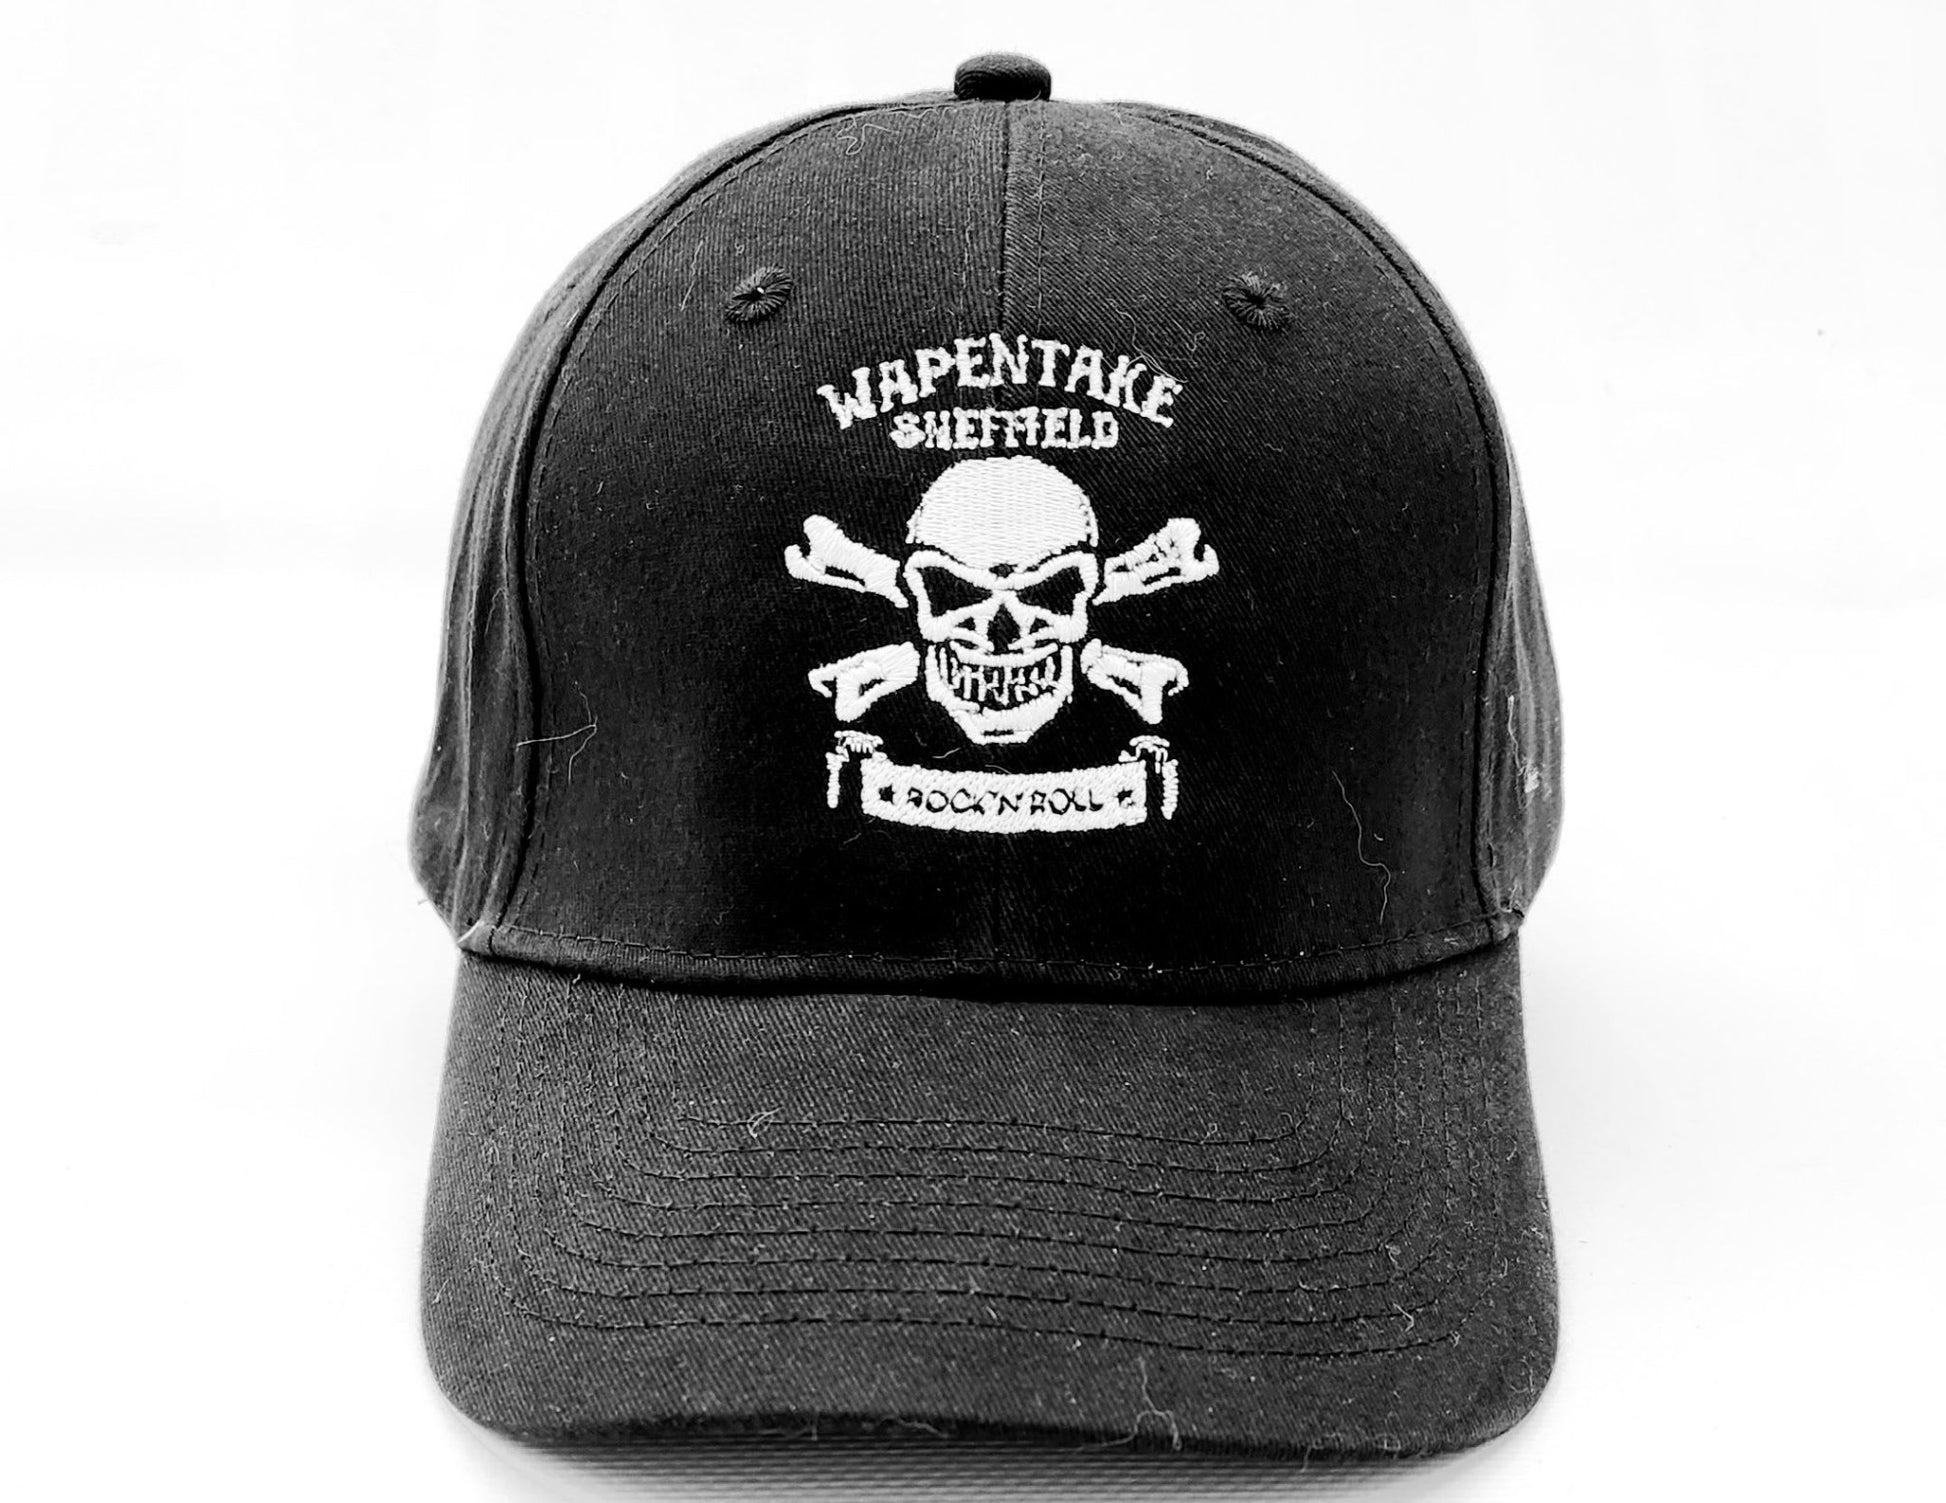 Wapentake skull/crossbones unisex baseball cap - Dirty Stop Outs